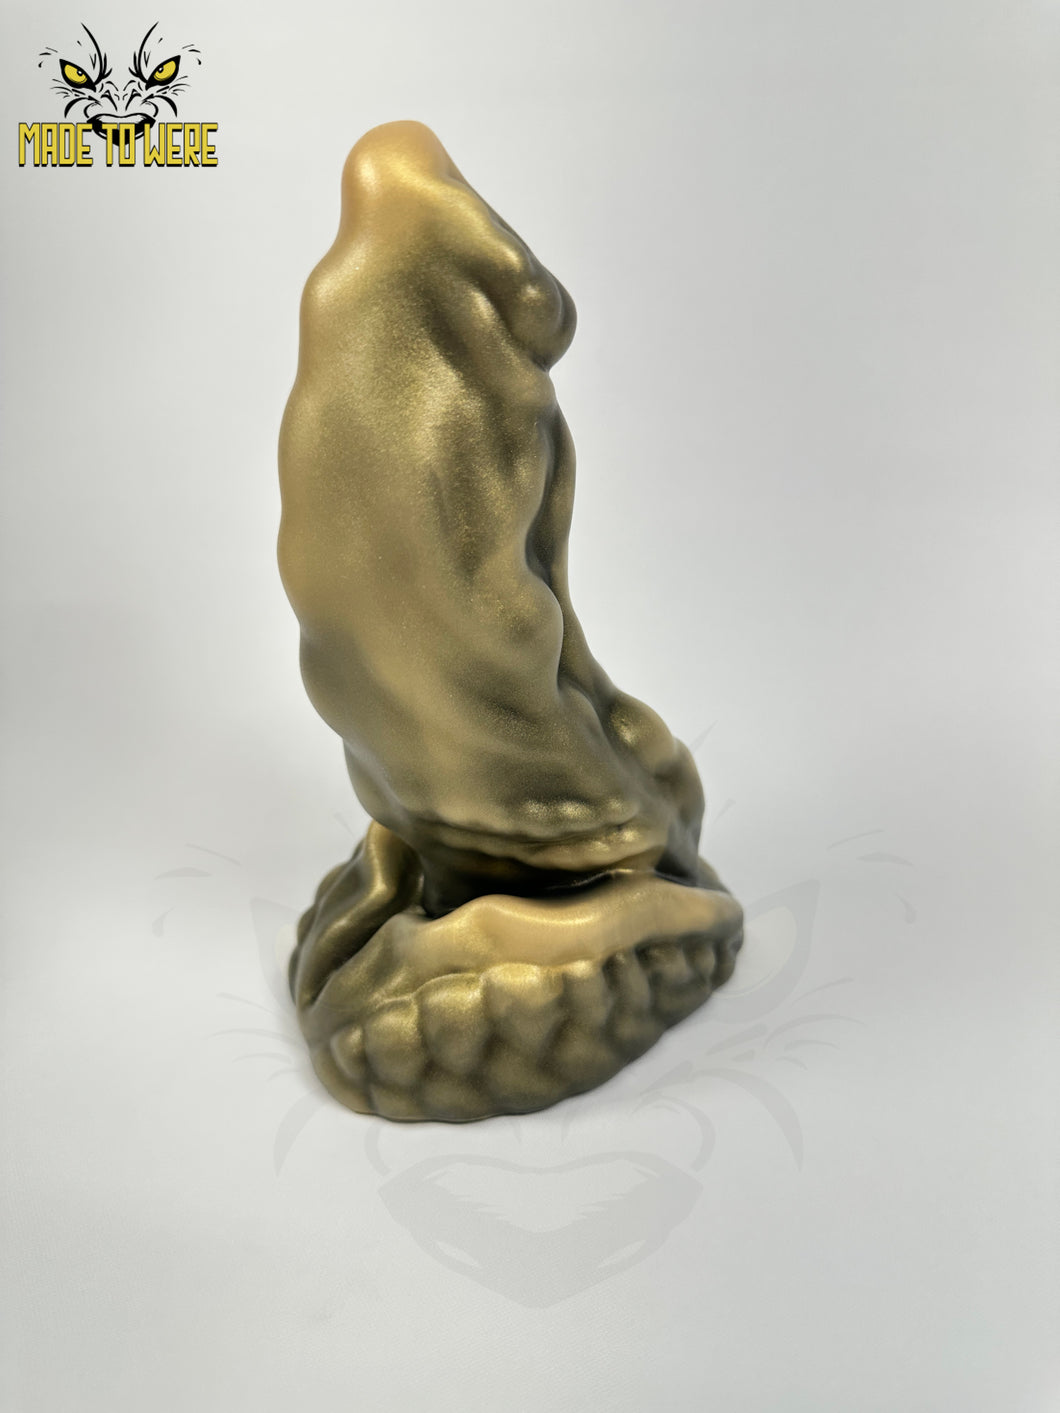 Medium Size Erect Bask, Soft 00-30 Firmness, Bronze Statue